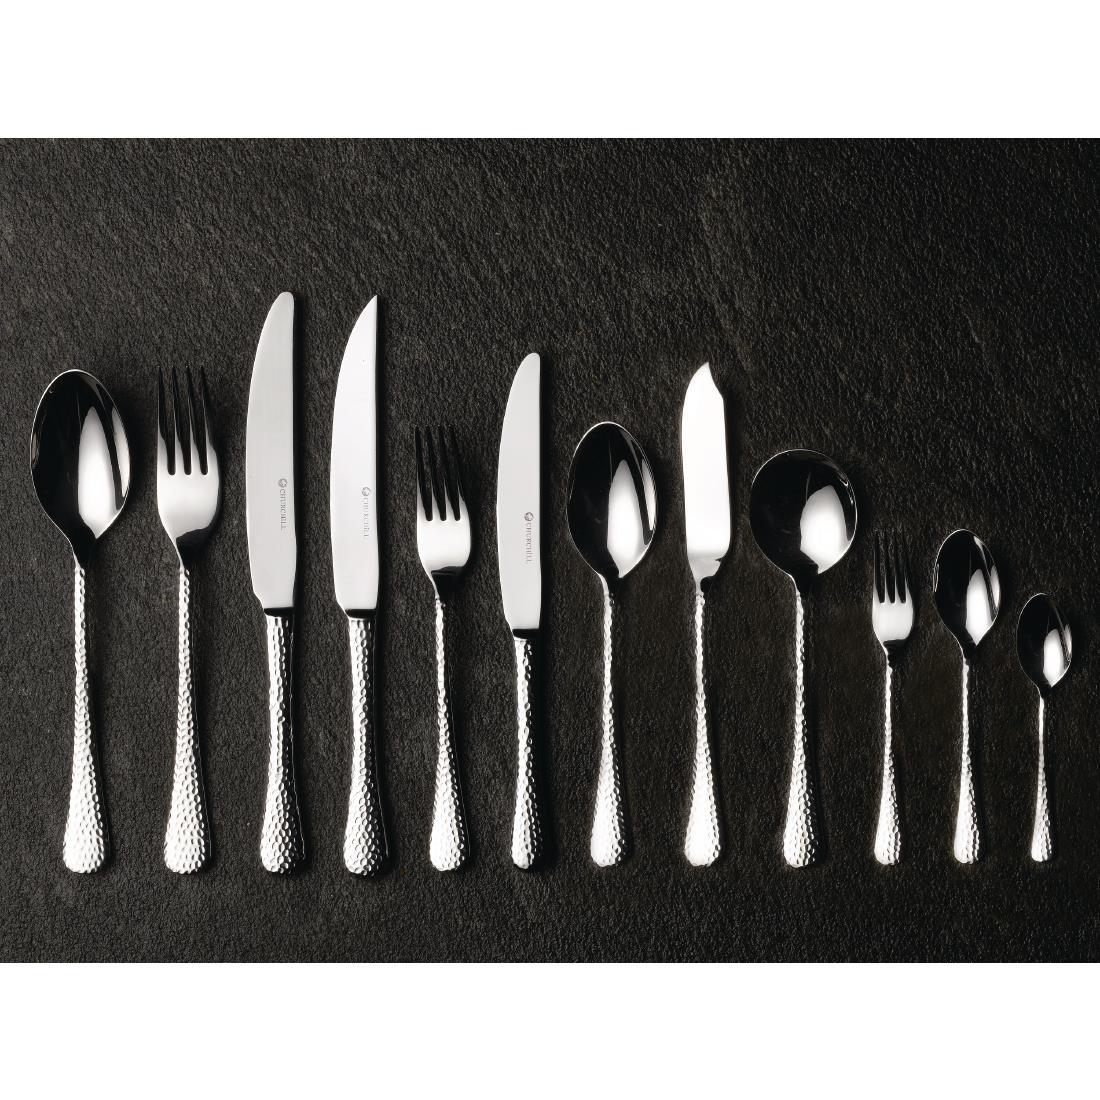 Churchill Isla Demitasse Spoons (Pack of 12) - FA745  - 2